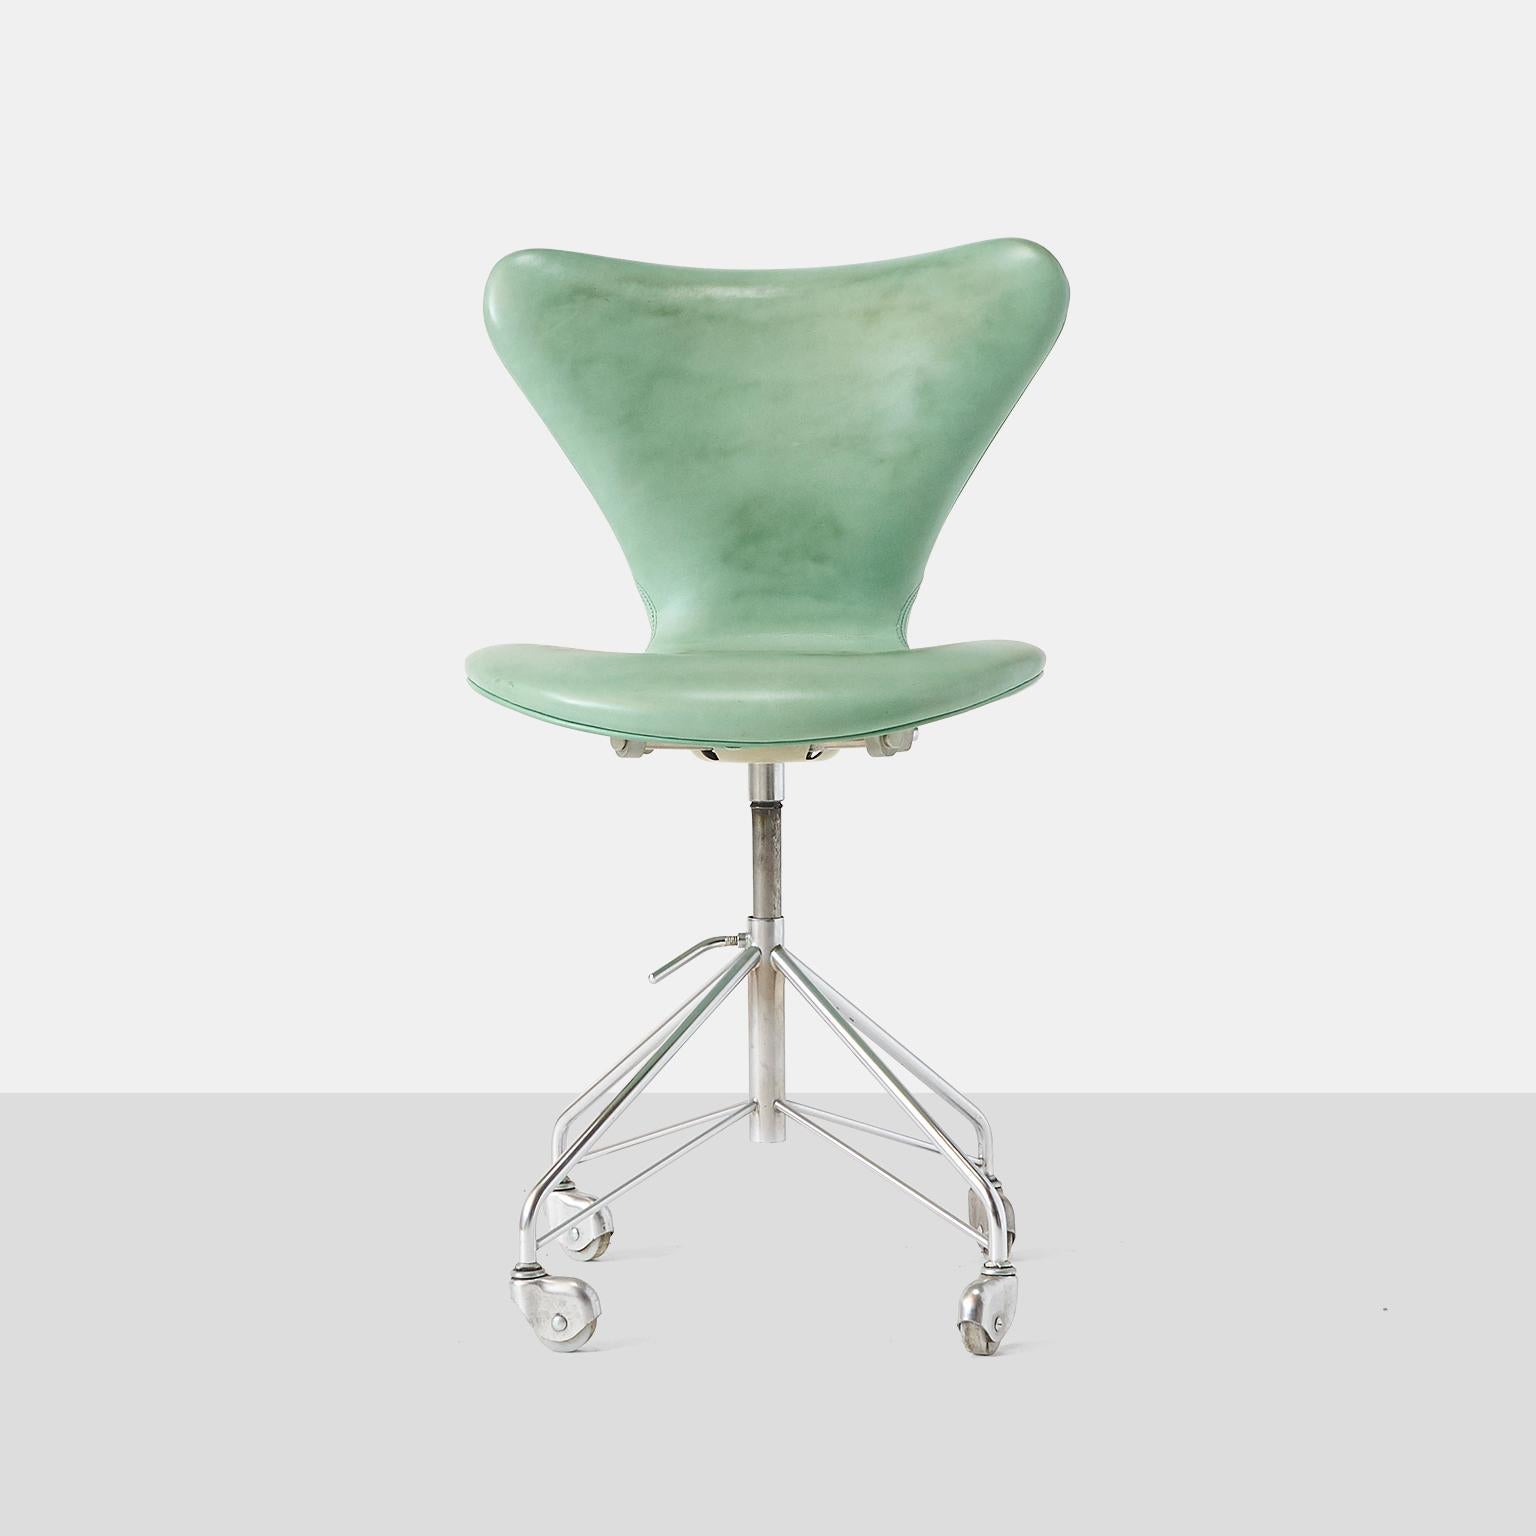 Danish A Series 7 Office Chair, Model 3117, by Arne Jacobsen